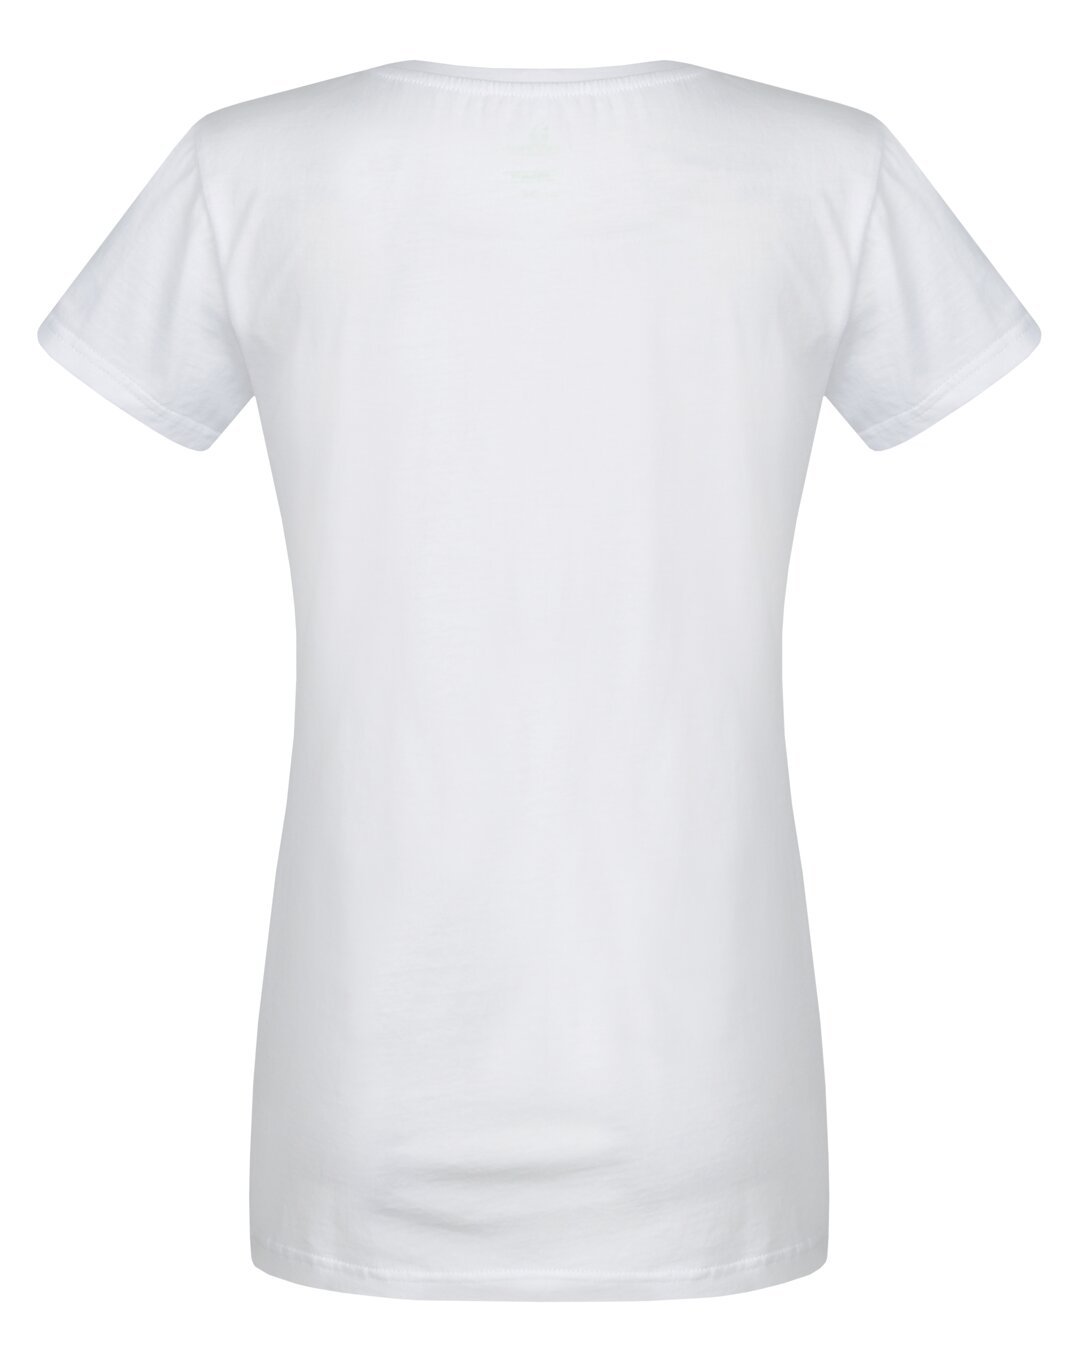 T-shirt - Short-sleeve HANNAH LAVINET Lady - Hannah - Outdoor clothing ...